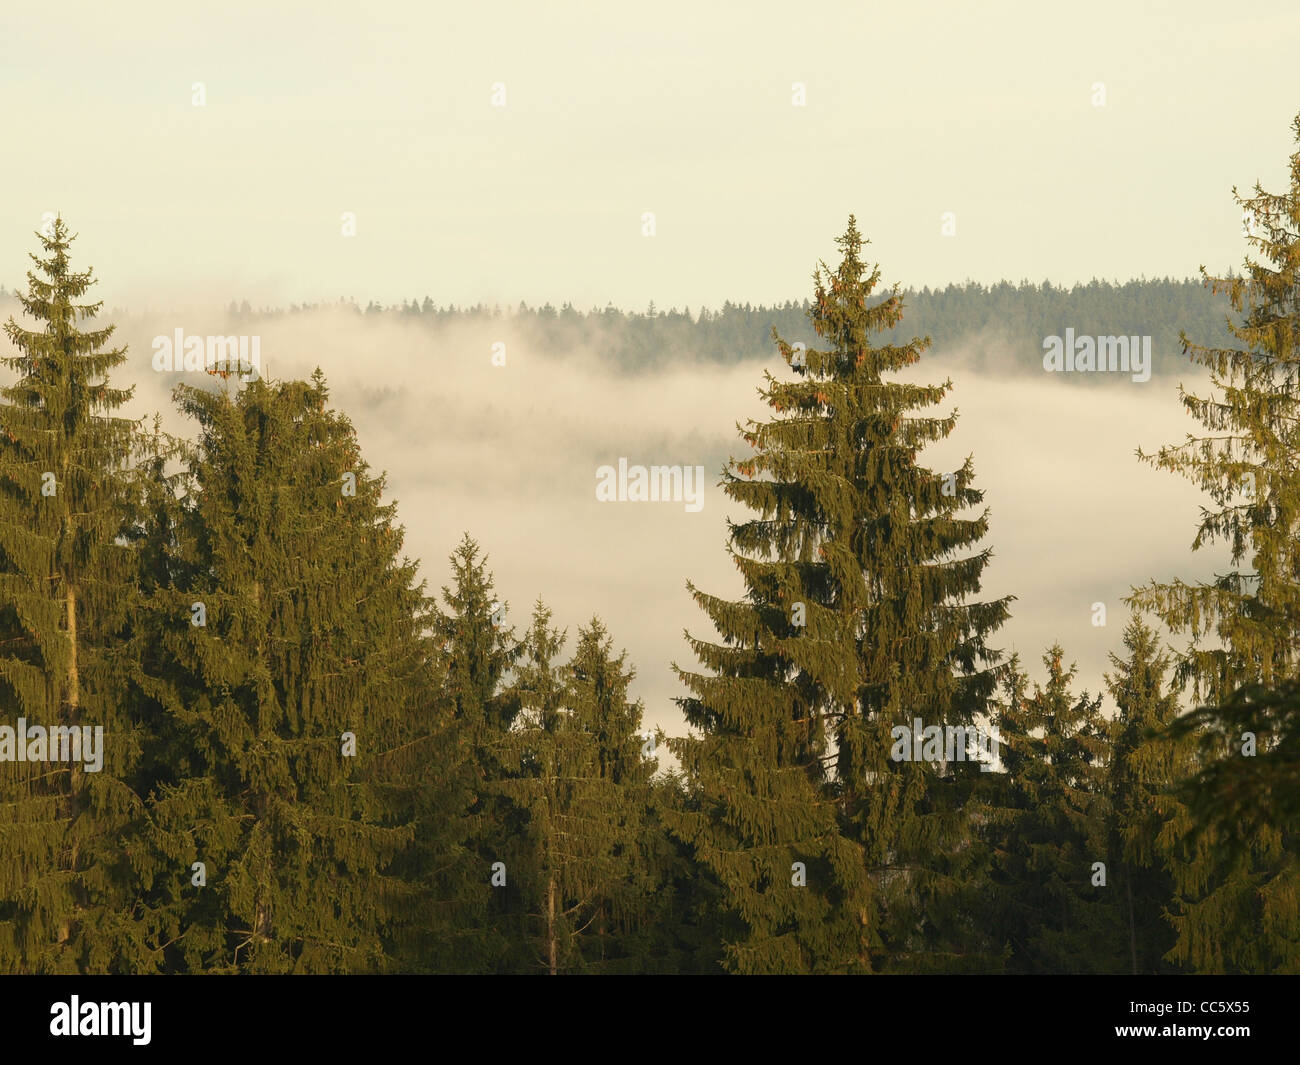 La madera envuelta en niebla matutina / Wald en Morgen - Nebel gehüllt Foto de stock